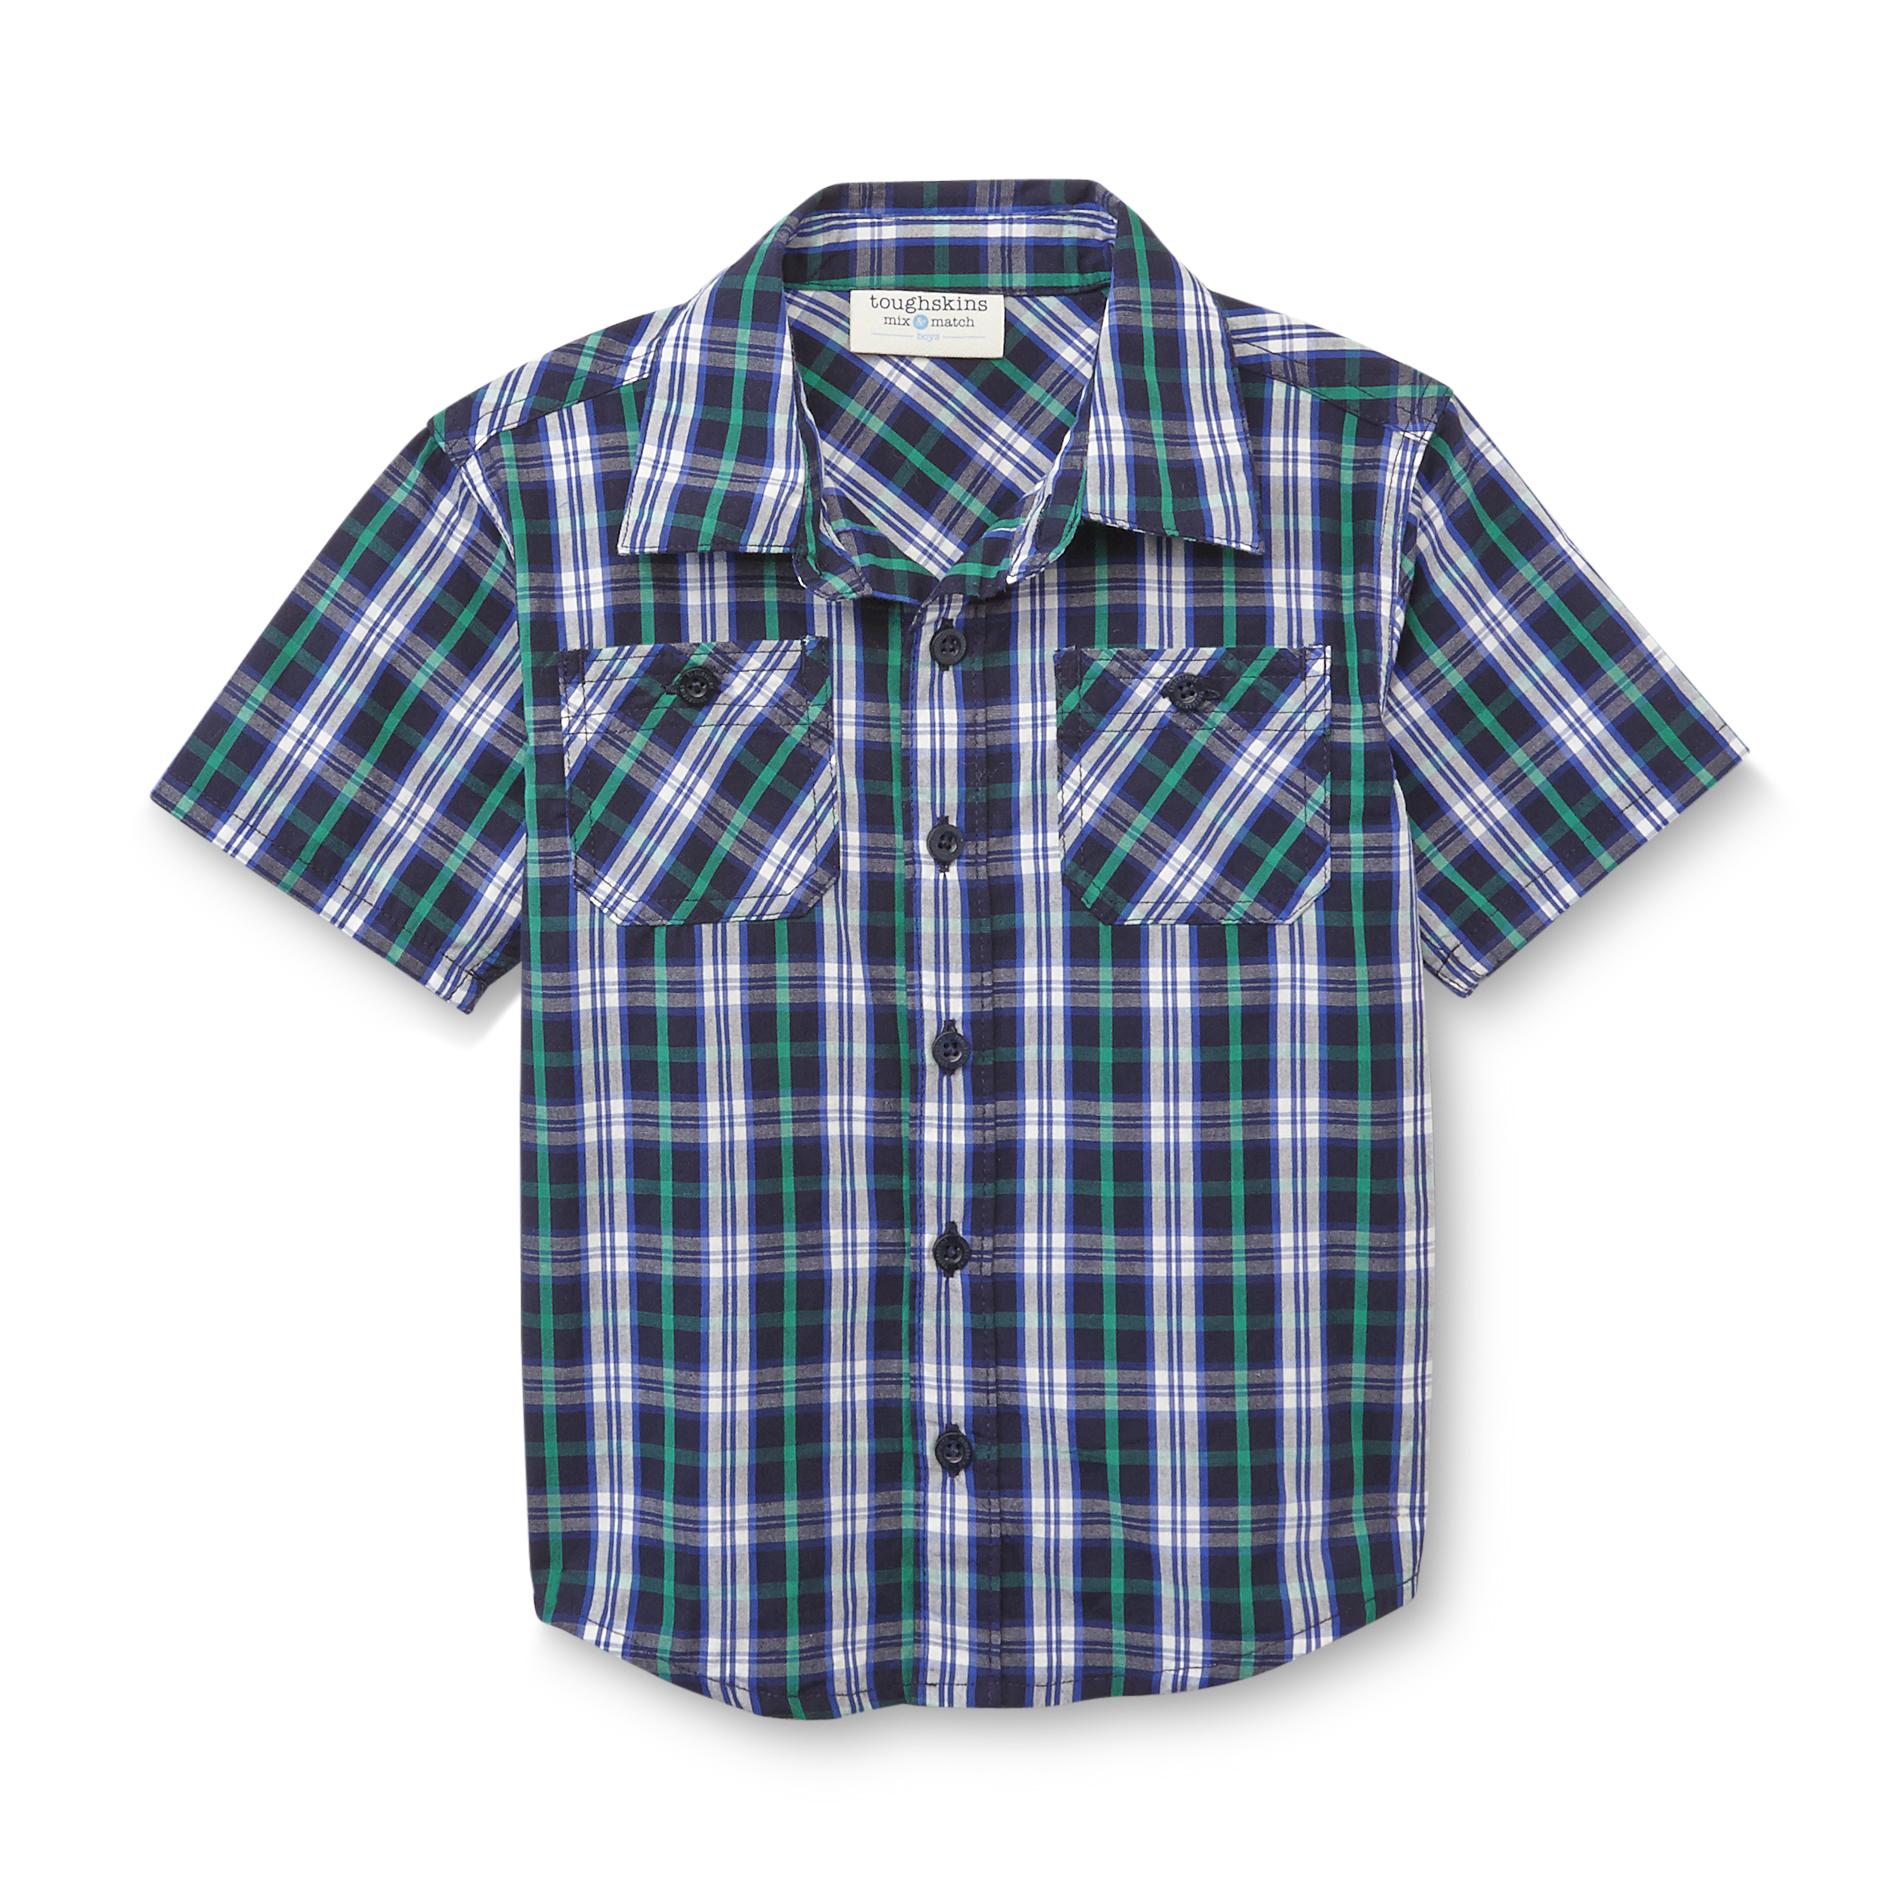 Toughskins Infant & Toddler Boy's Button-Front Shirt - Plaid